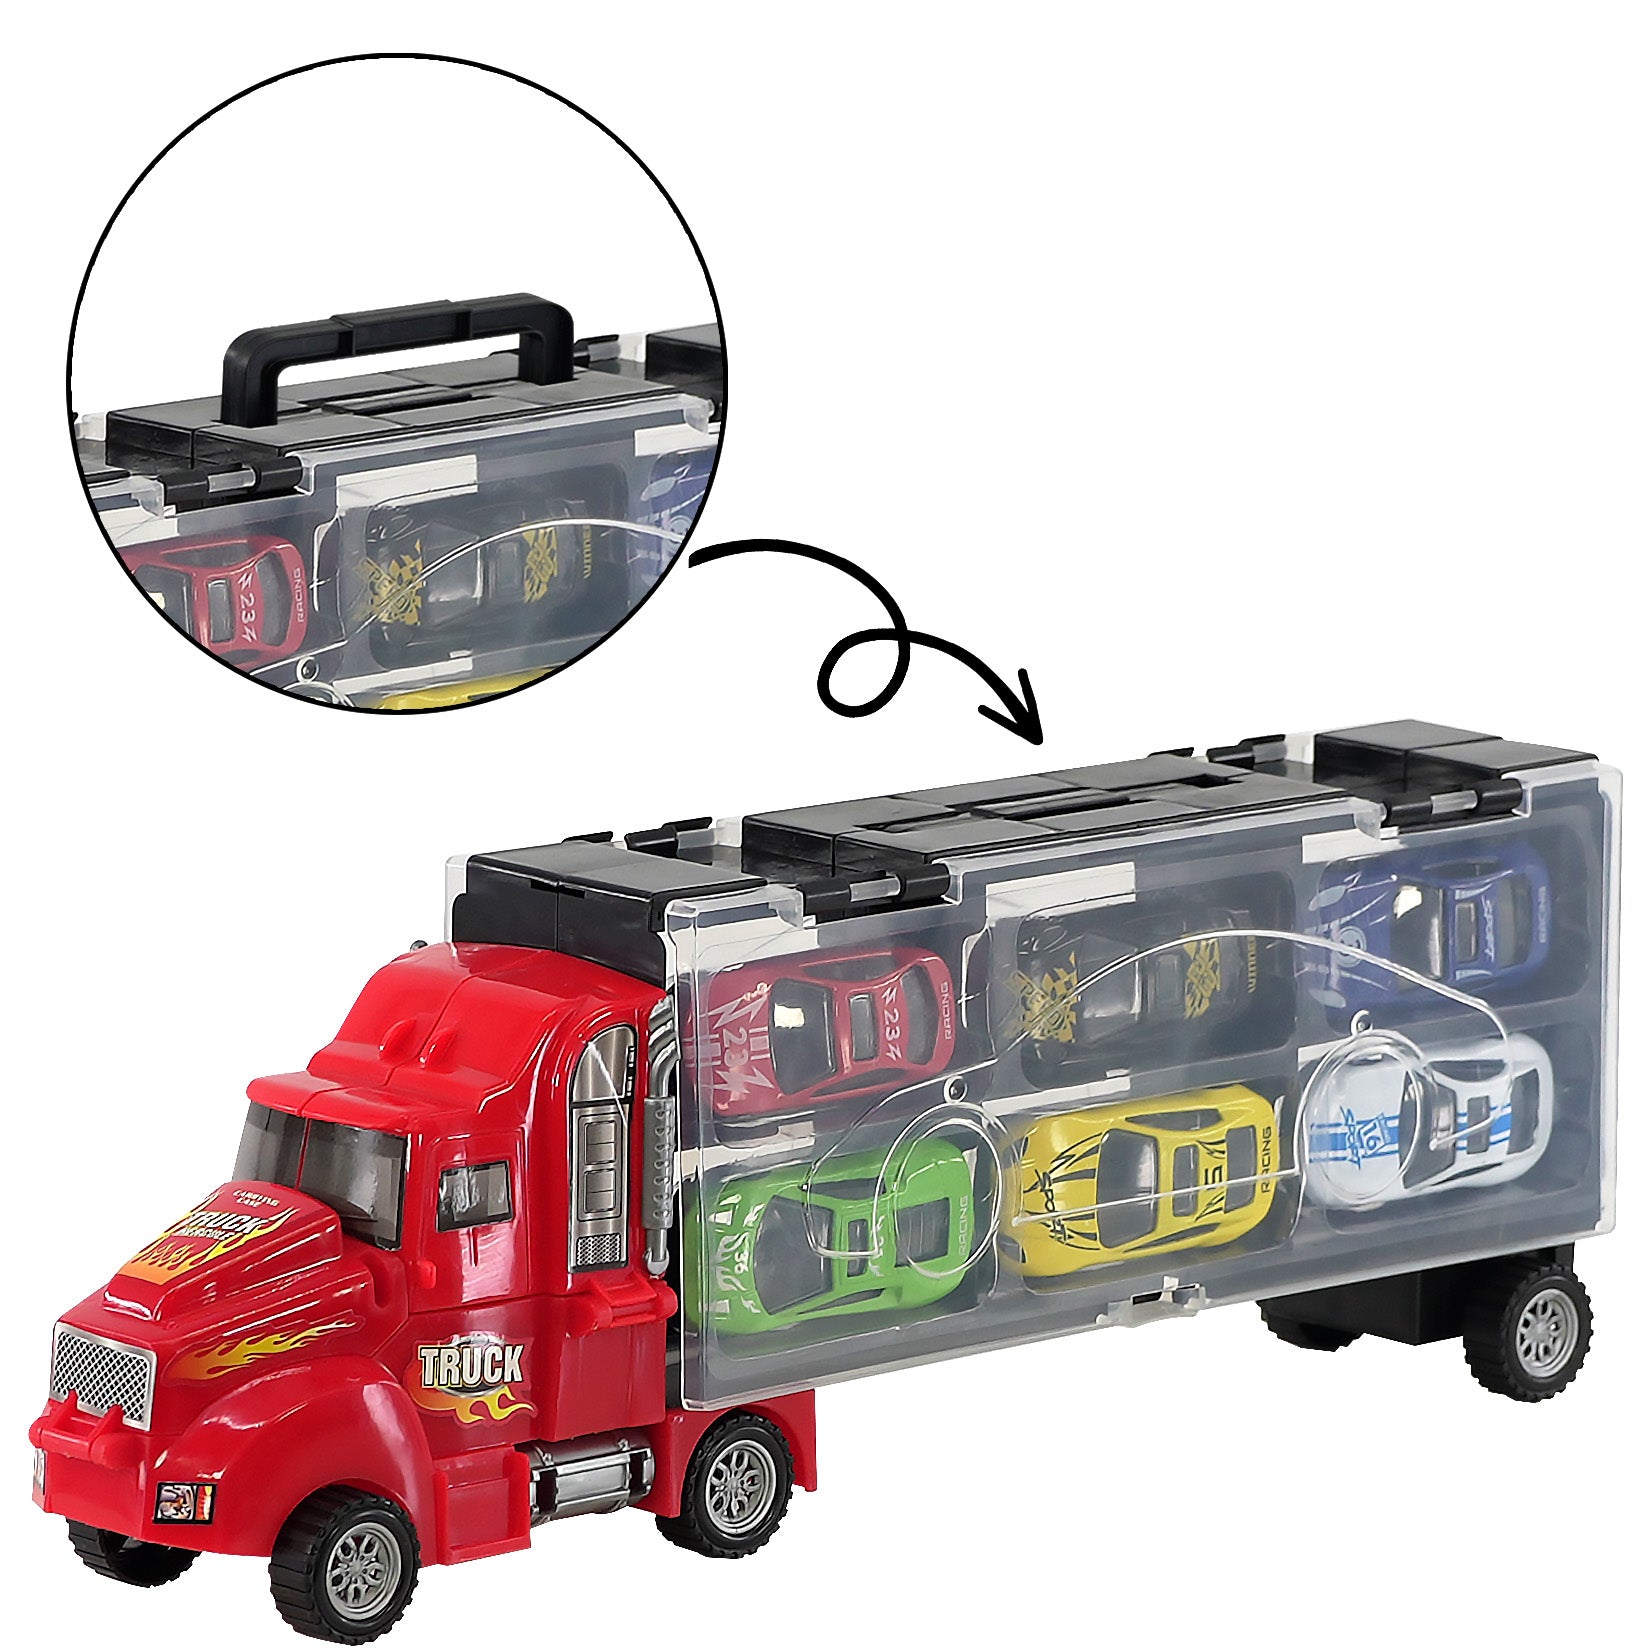 Kids Toy Truck Carrier & 6 Mini Cars Set The Magic Toy Shop - The Magic Toy Shop